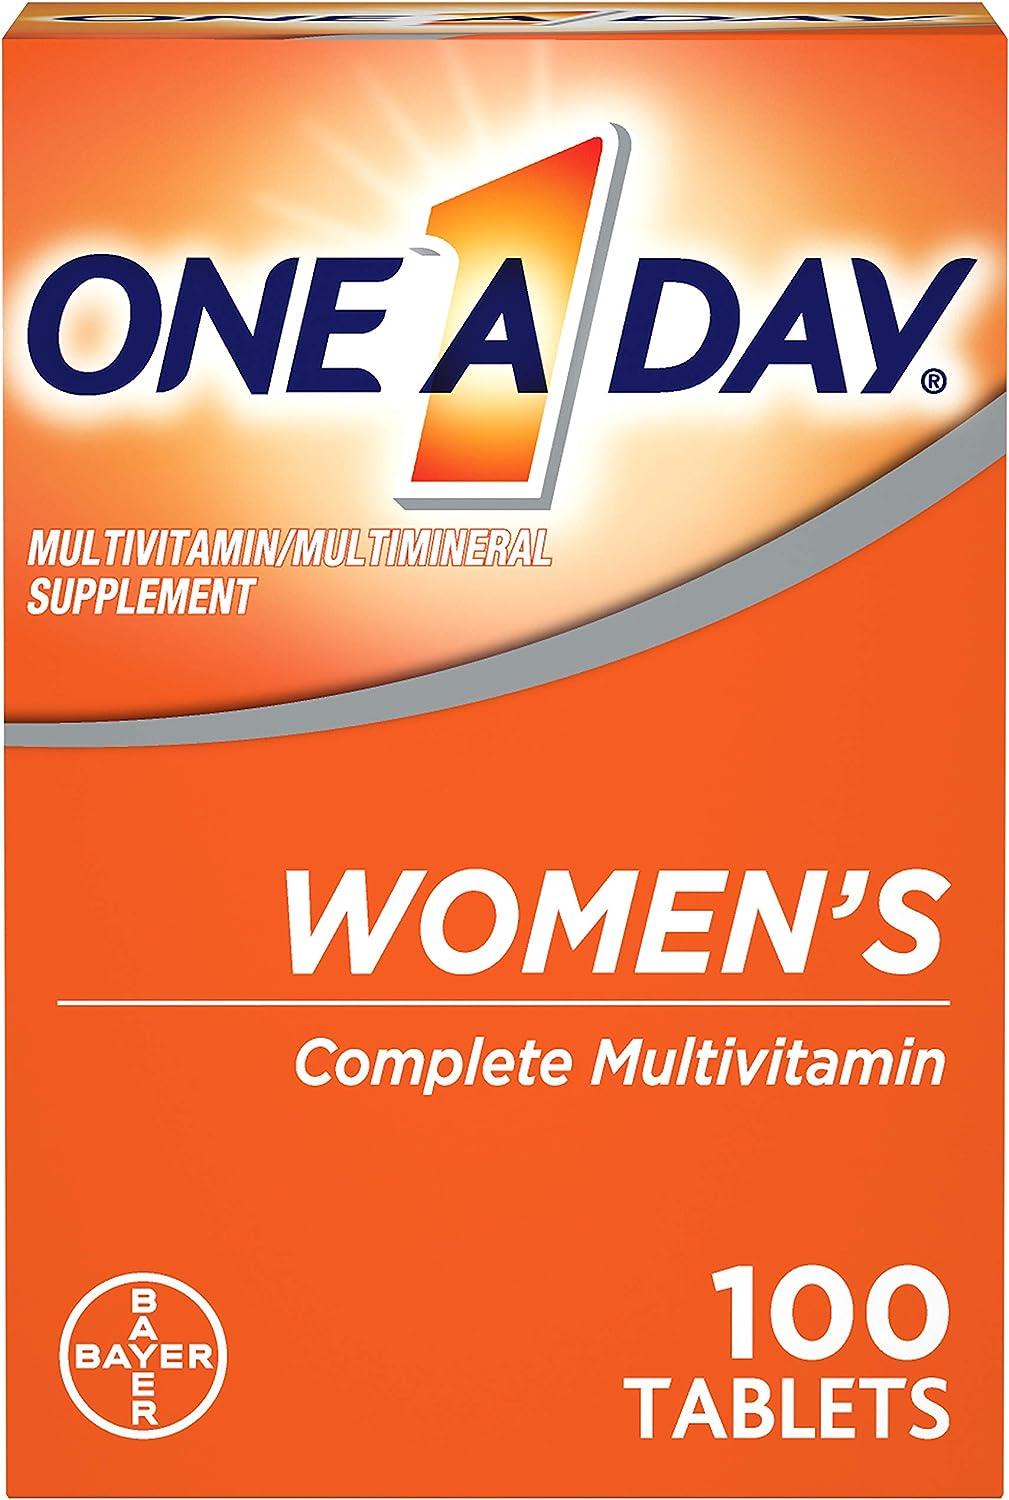 One a Day Multivitamines pour Femmes - mondialpharma.com